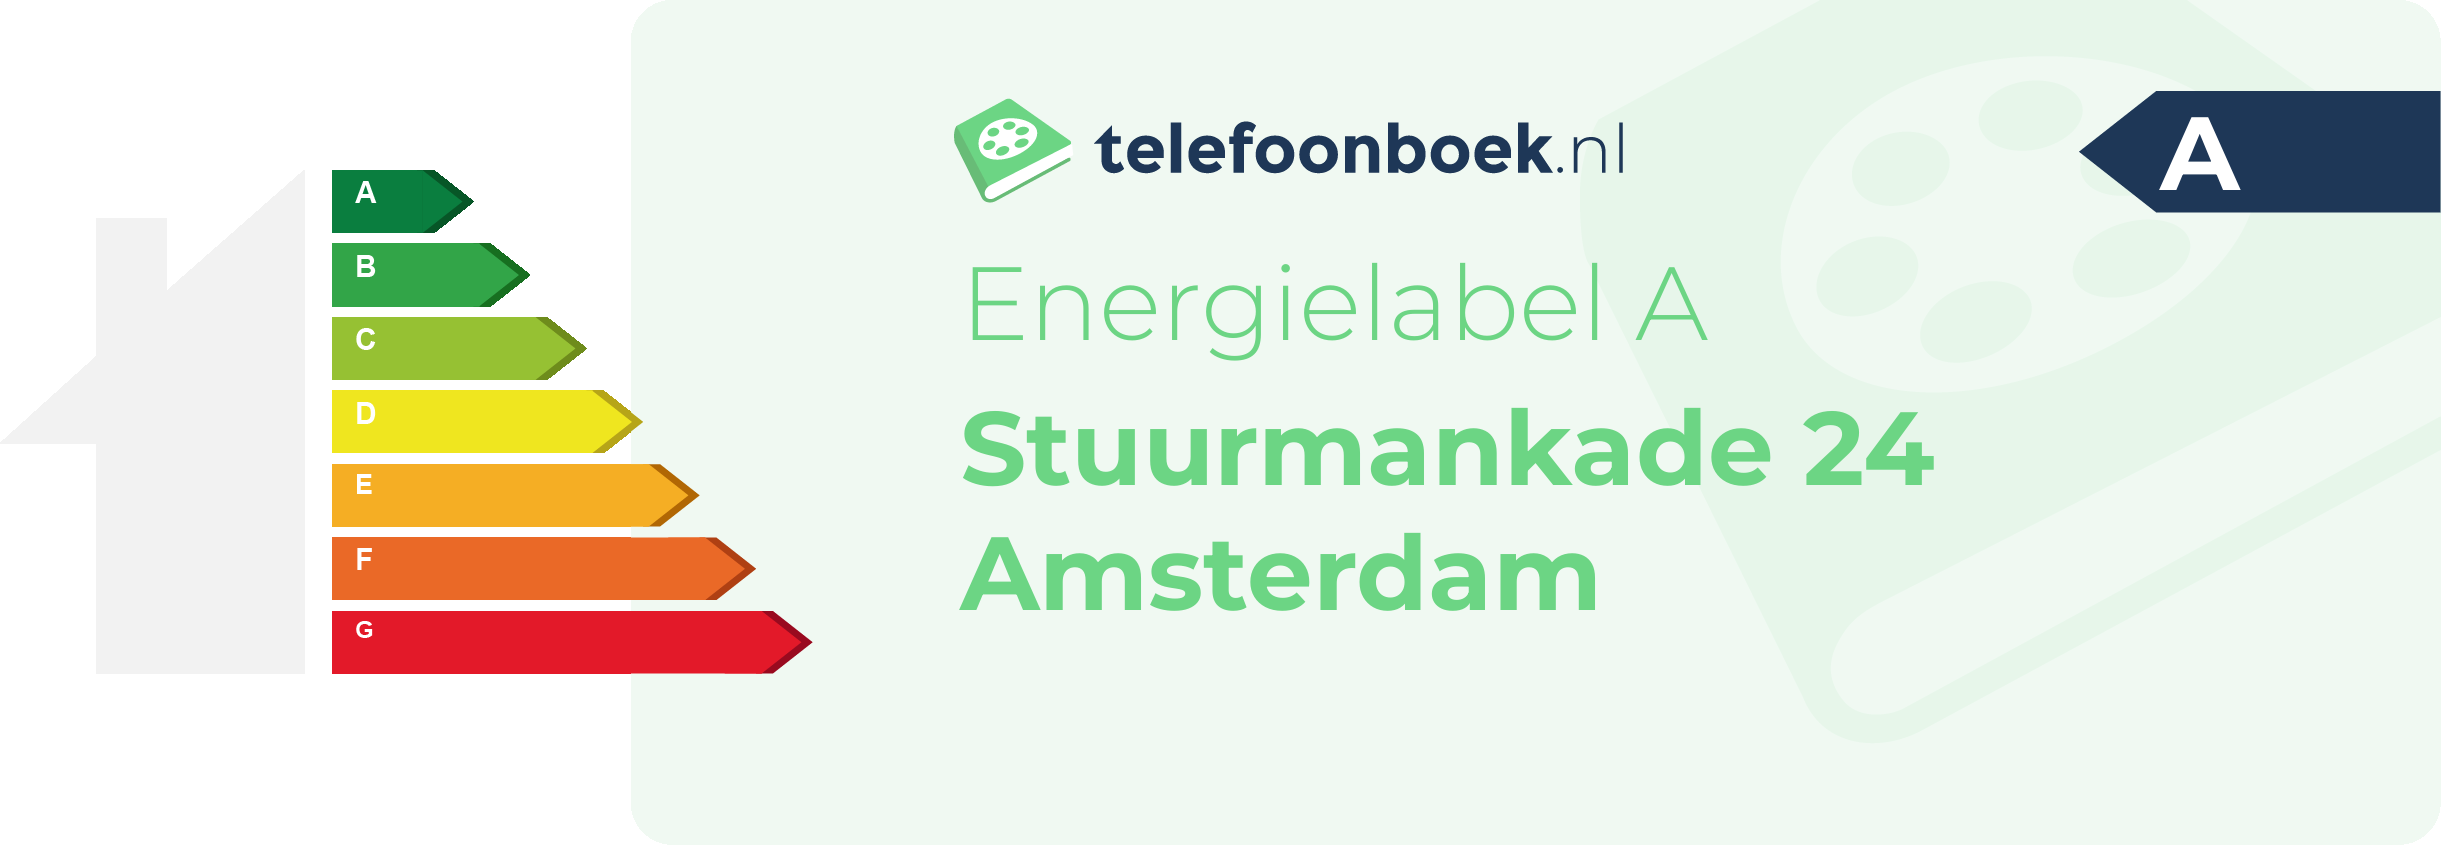 Energielabel Stuurmankade 24 Amsterdam